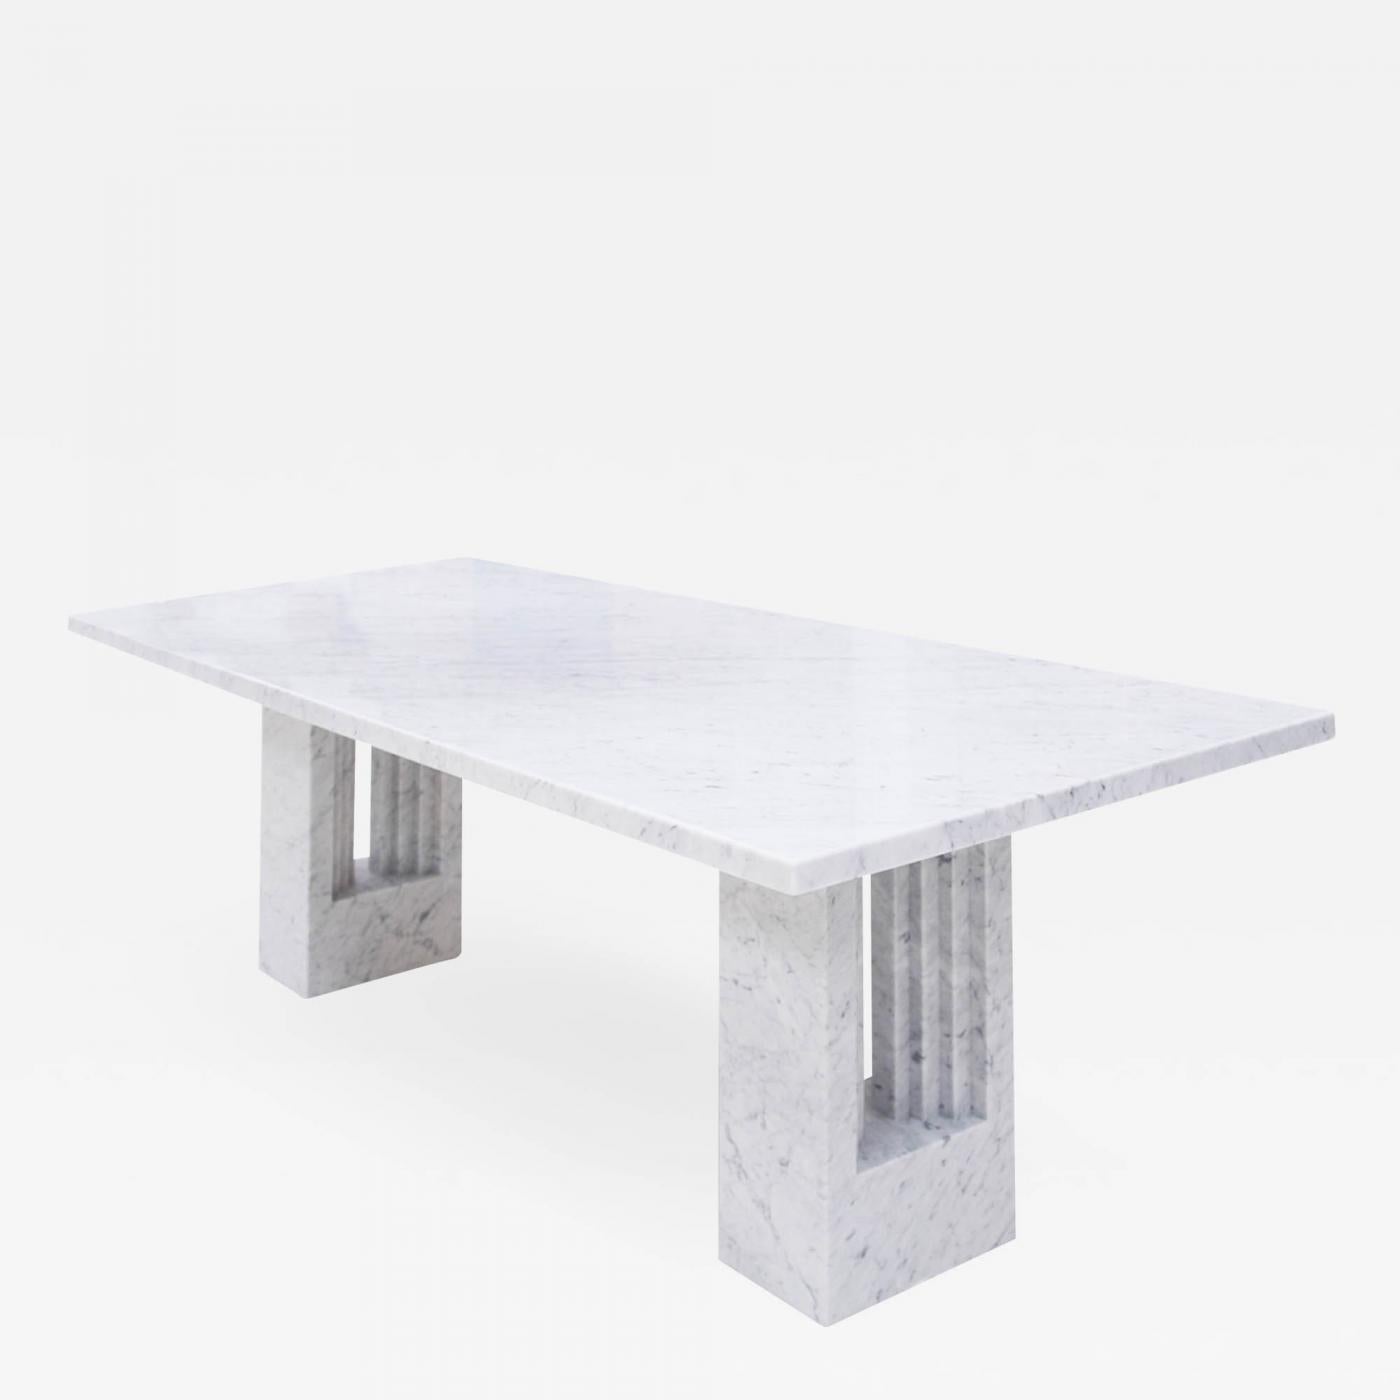 Italian Delfi carrara marble dining table by Carlo Scarpa and Marcel Breuer Gavina 1970s